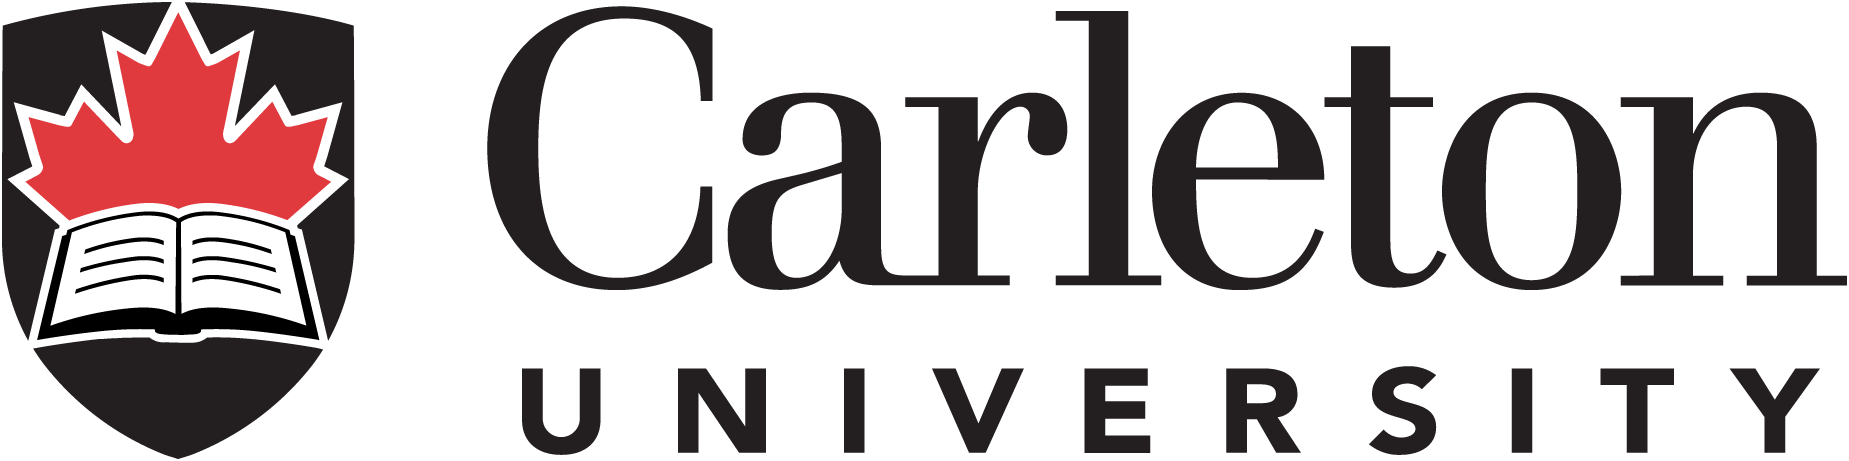 carleton university logo